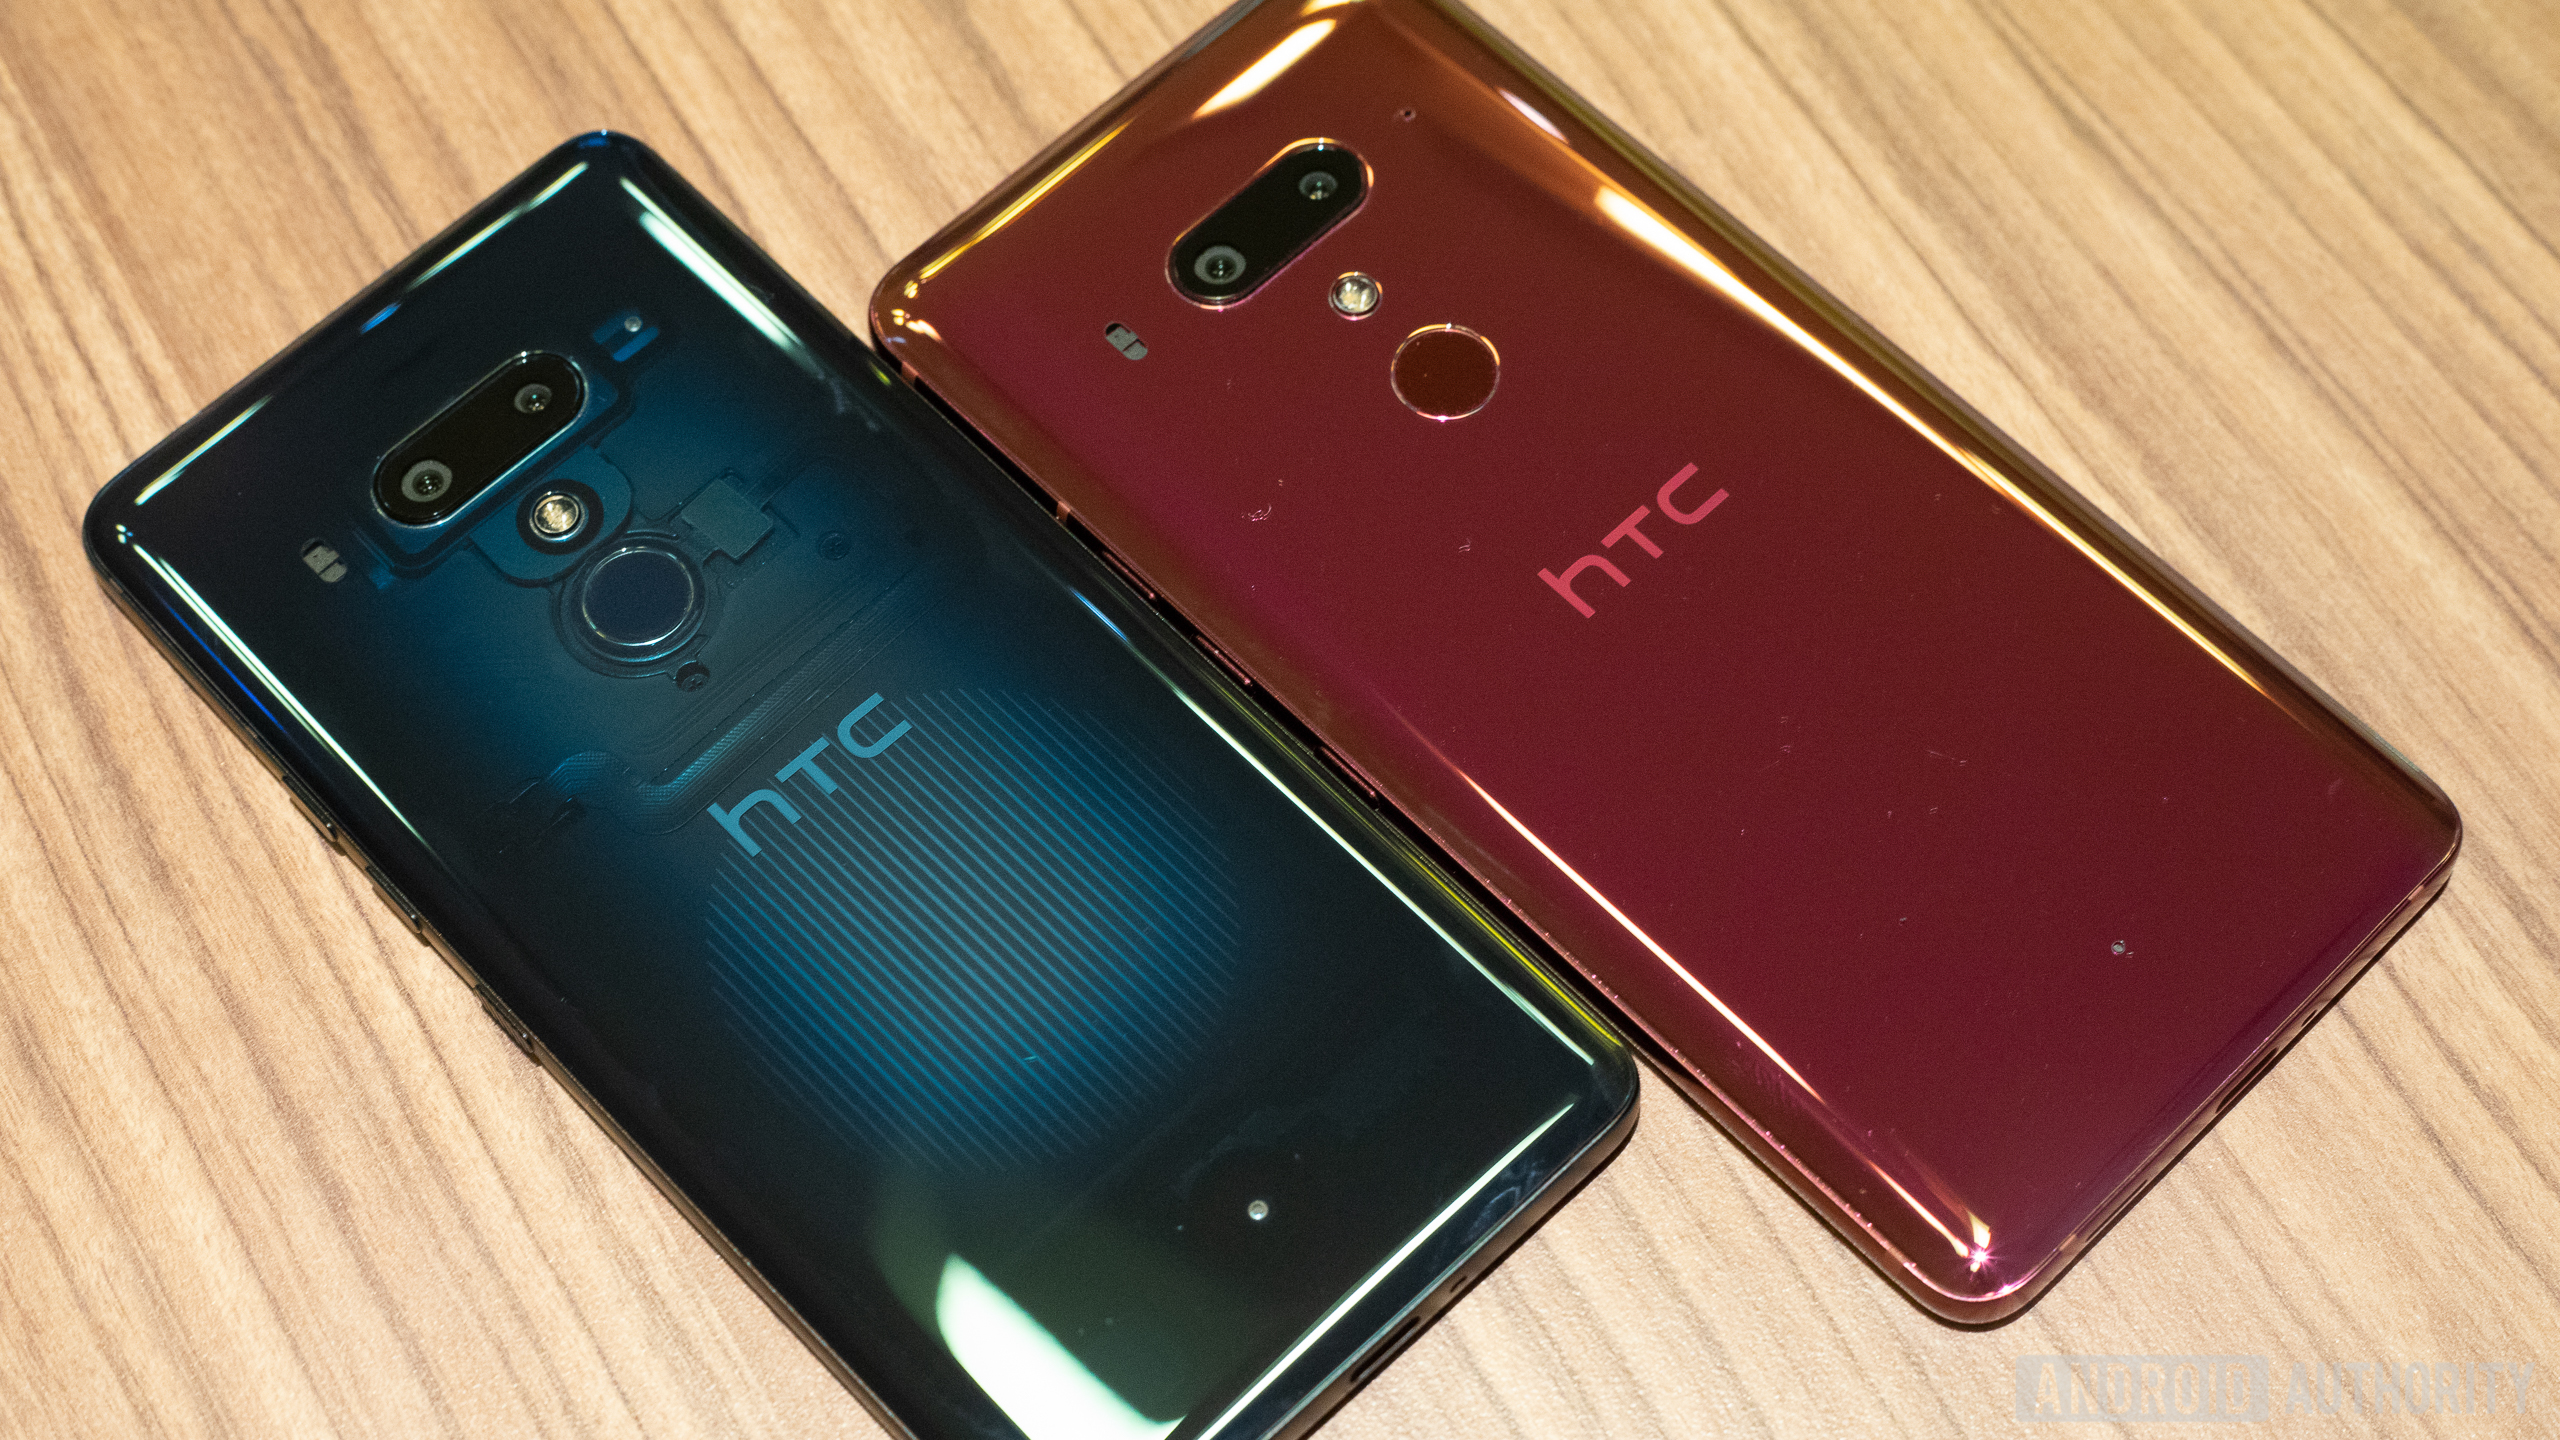 A blue HTC U12 Plus smartphone and a red HTC U12 Plus smartphone on a wooden surface.